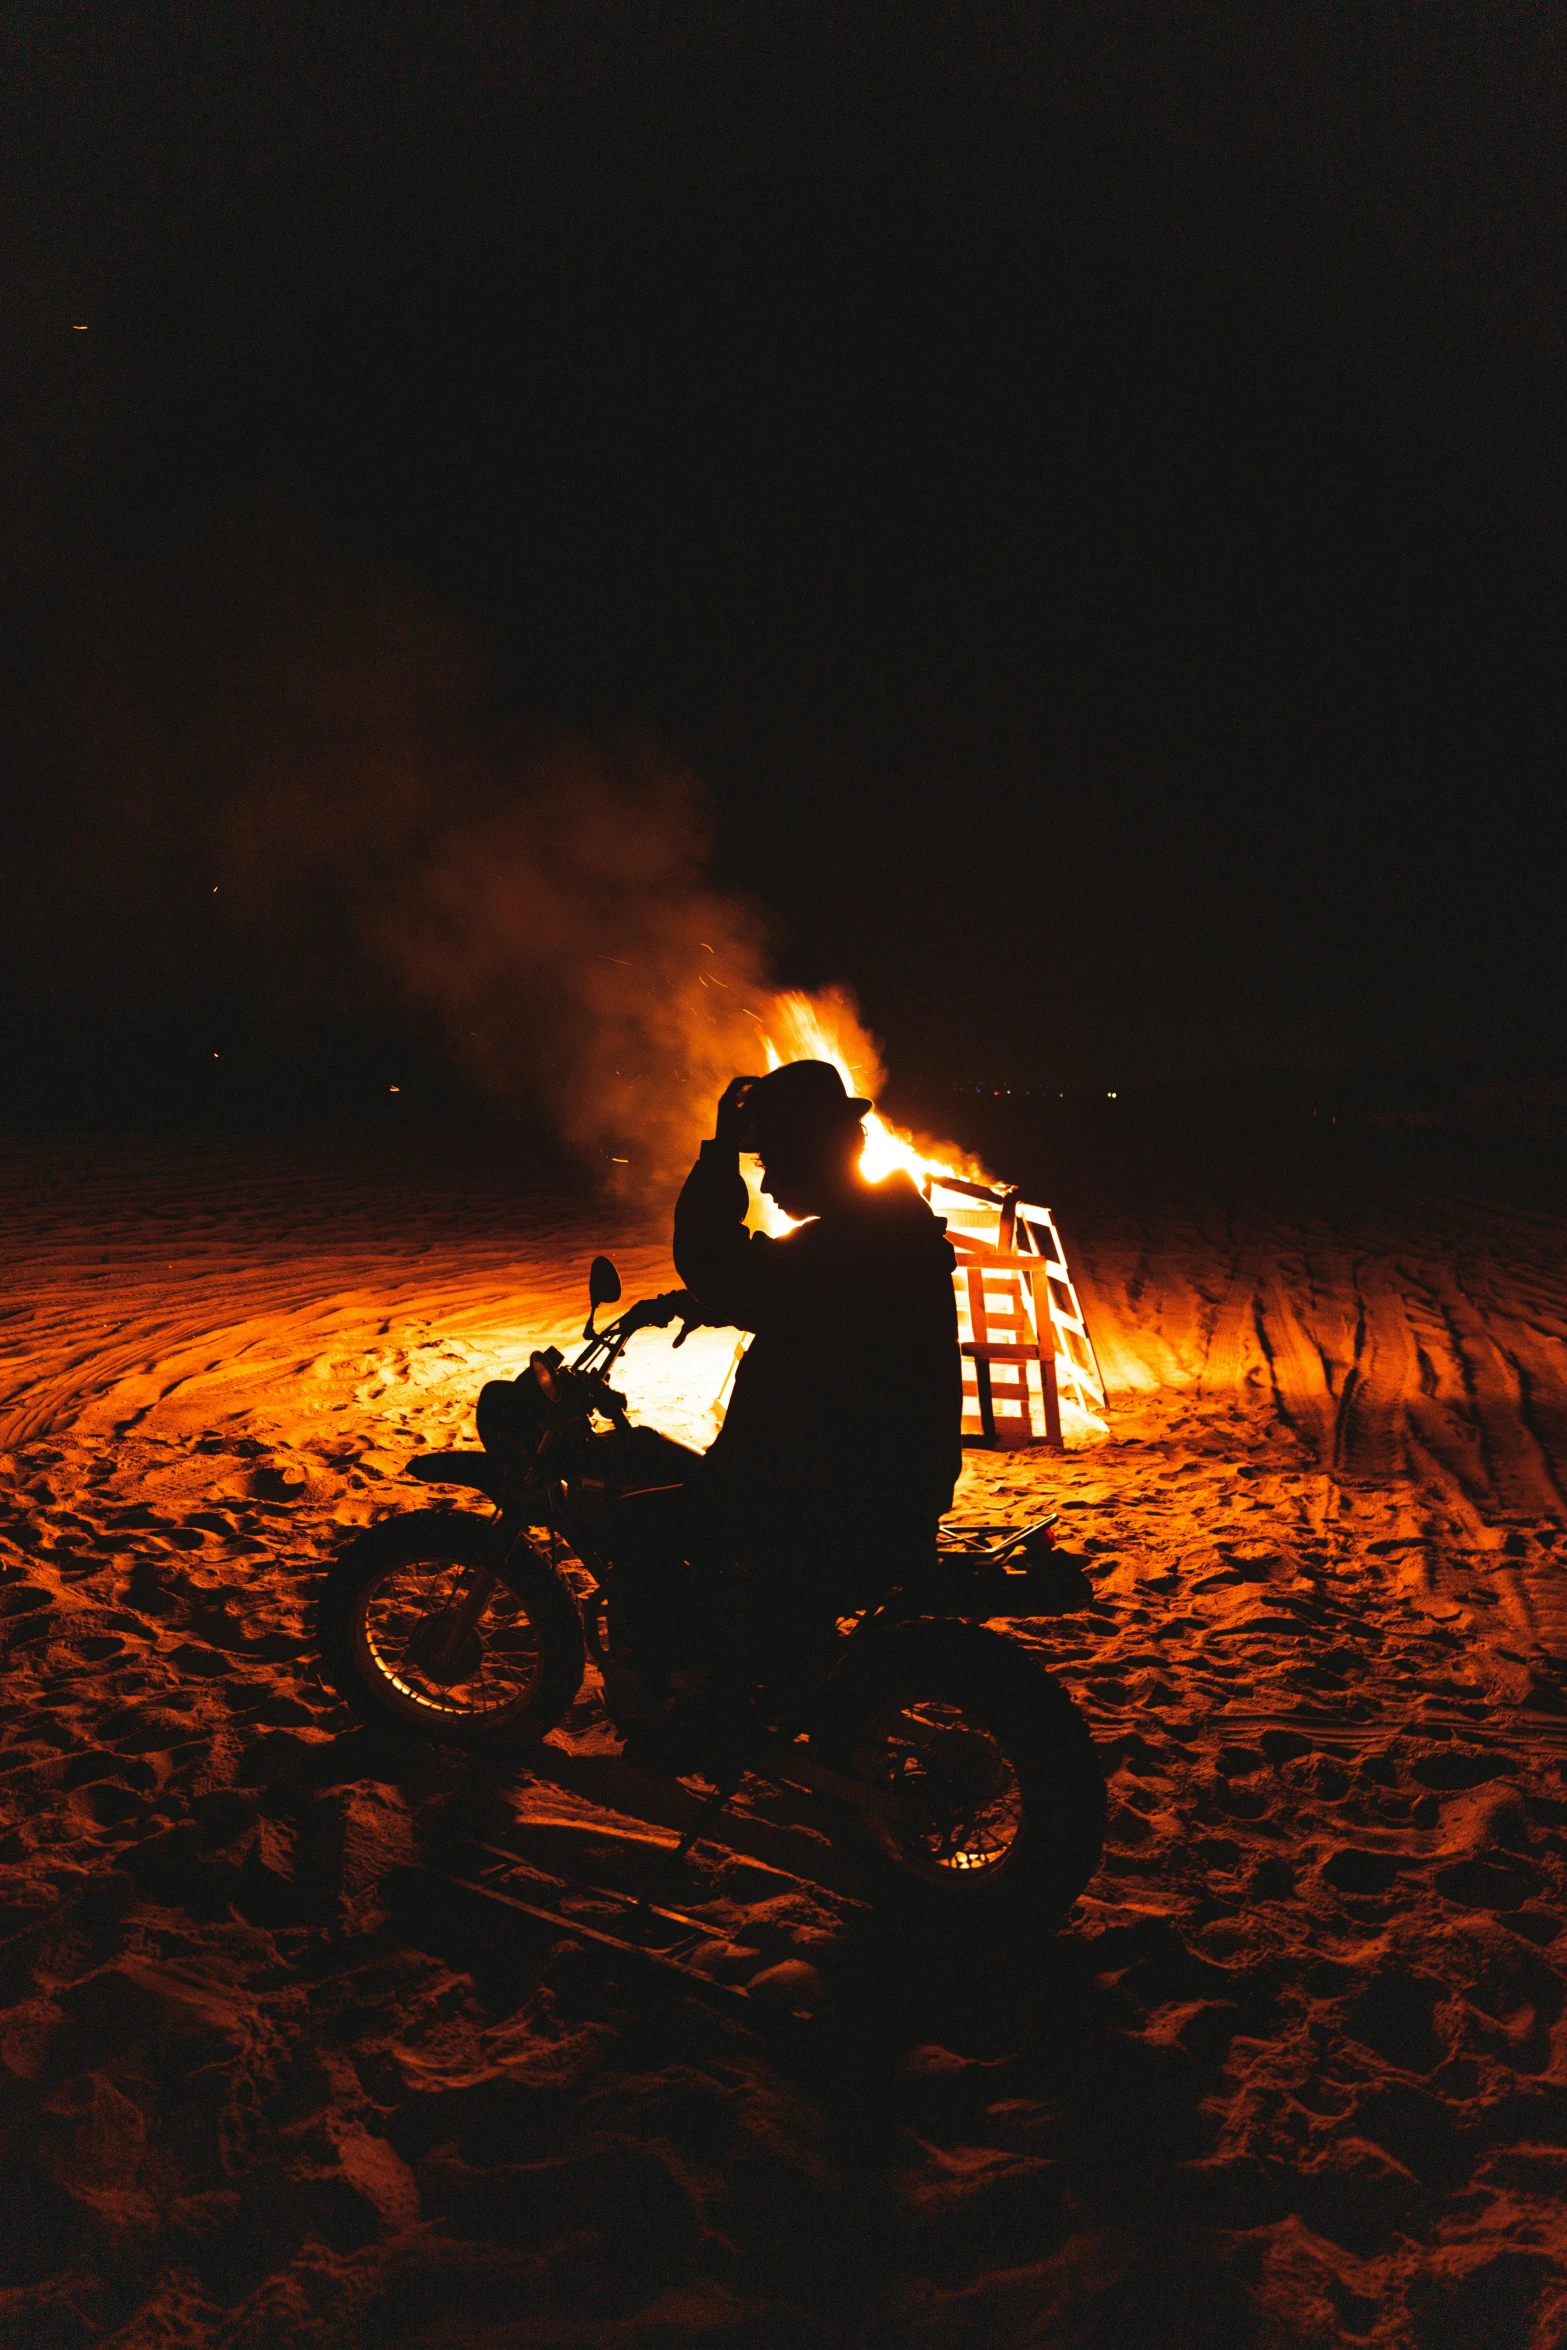 man riding motorcycle at night in desert area